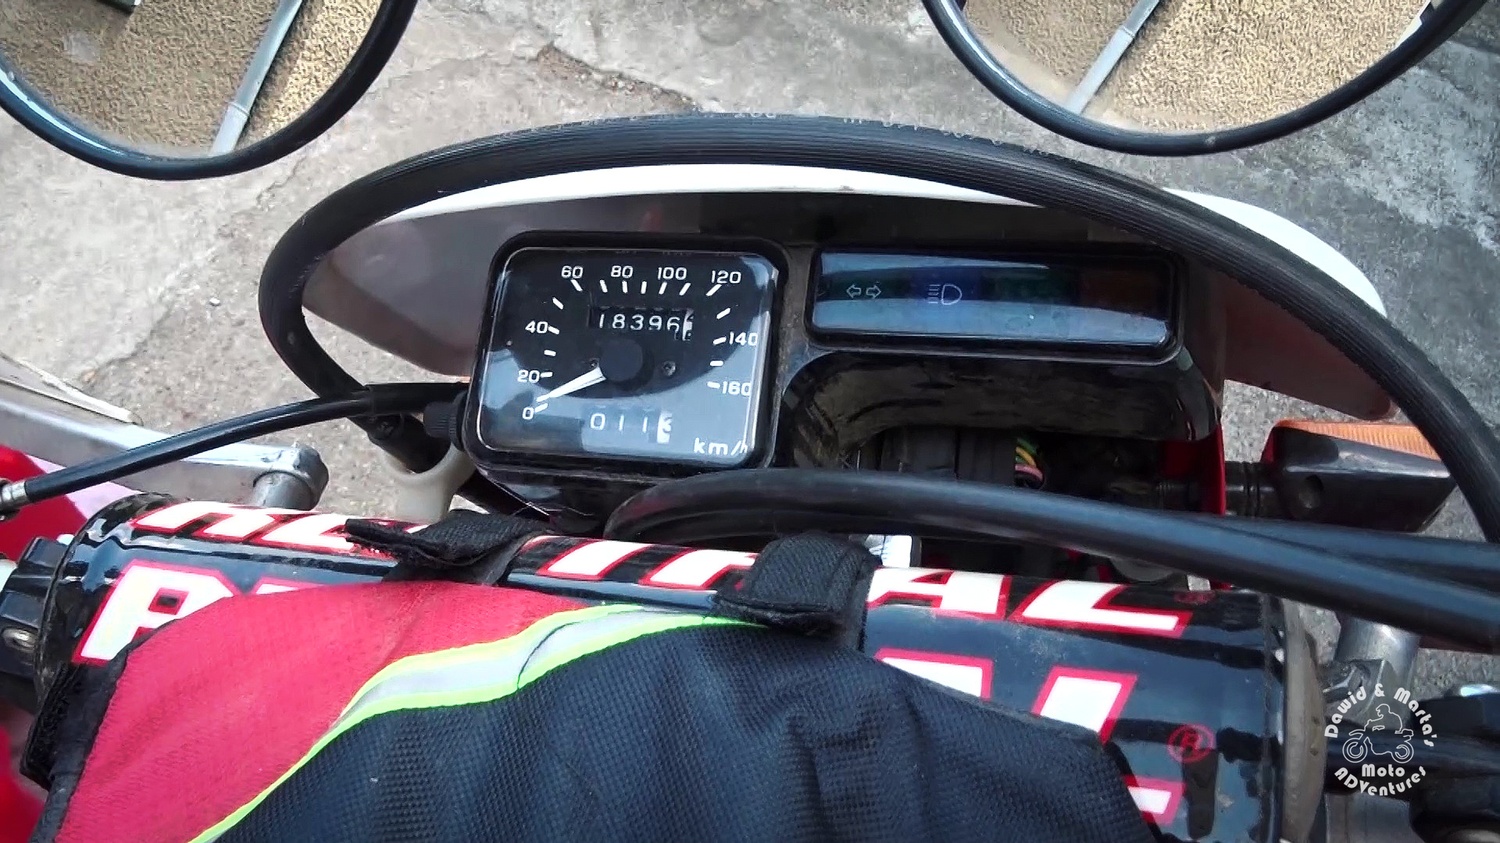 Honda XR400 speedometer